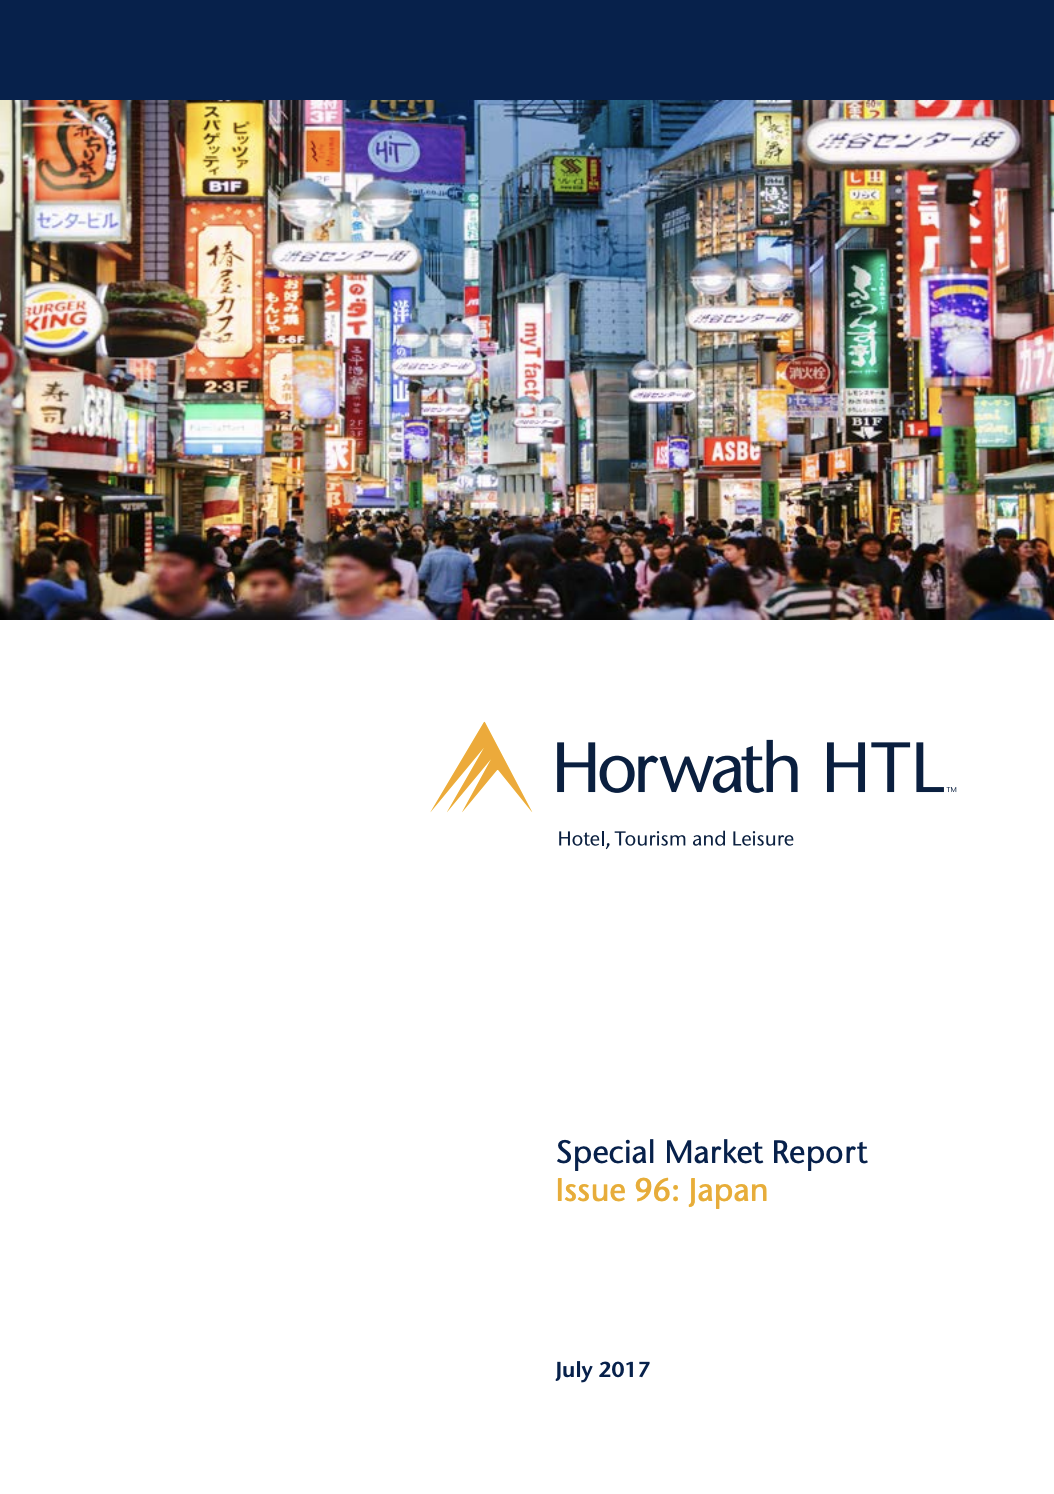 Japan Market report cover